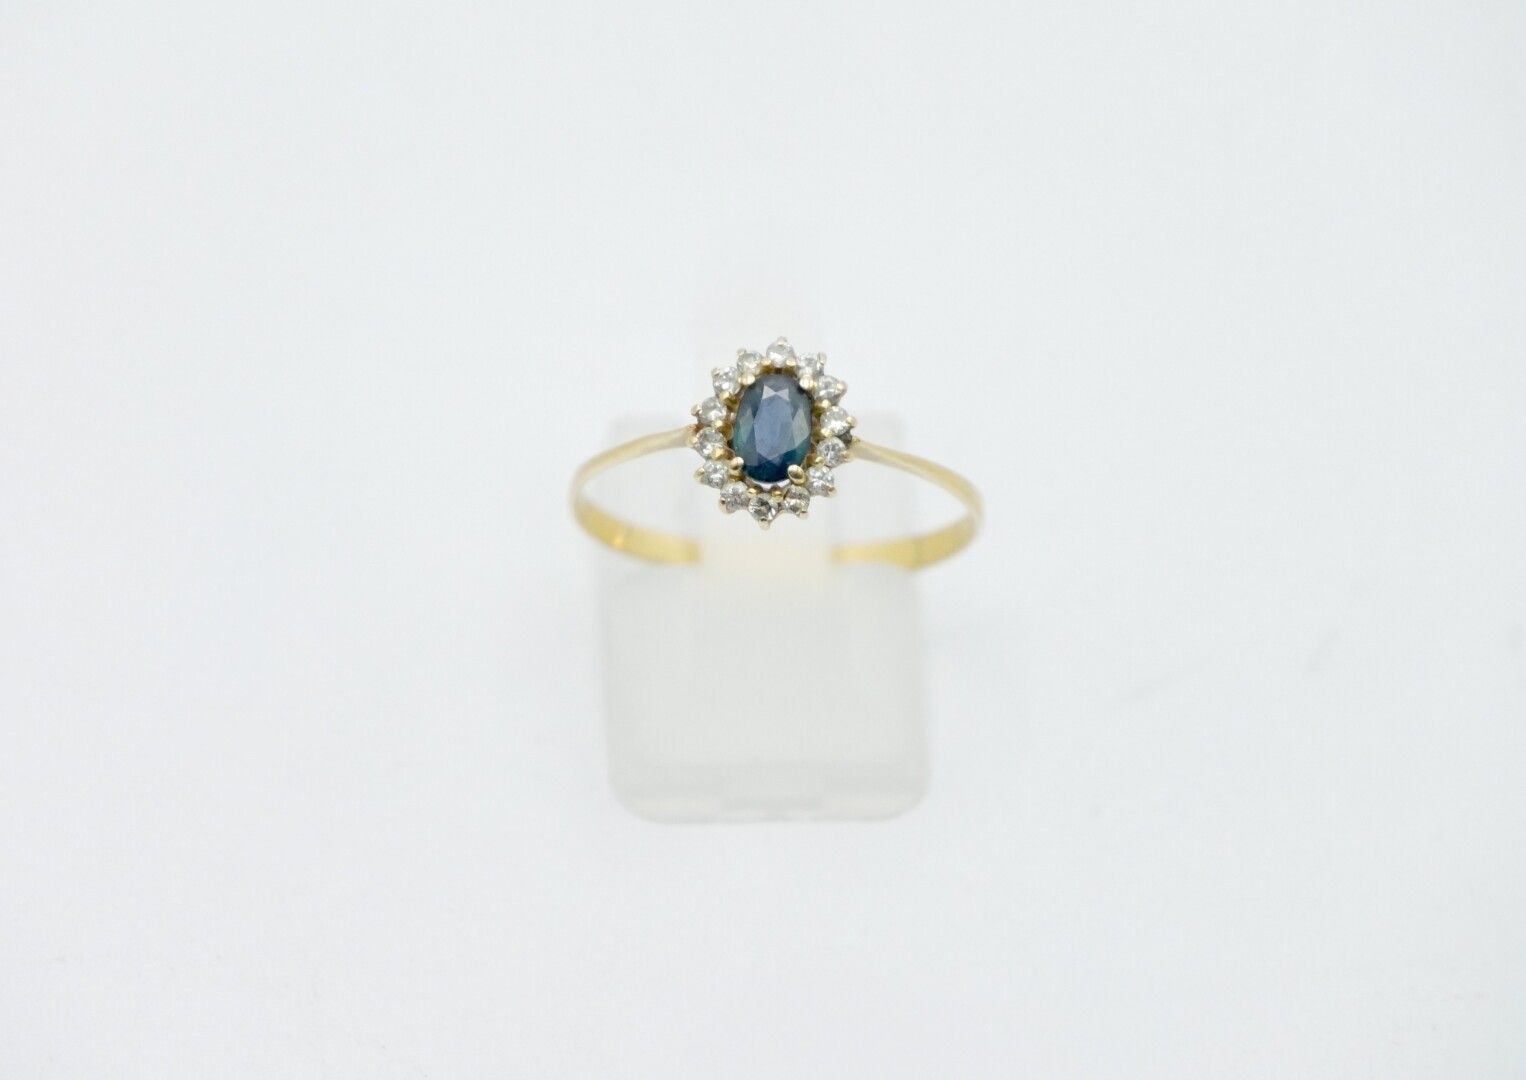 Null 750/1000e金戒指，中间是一颗蓝色宝石，周围是小钻石。

毛重：1,4克。

手指大小：58

对环的变形，使用状态